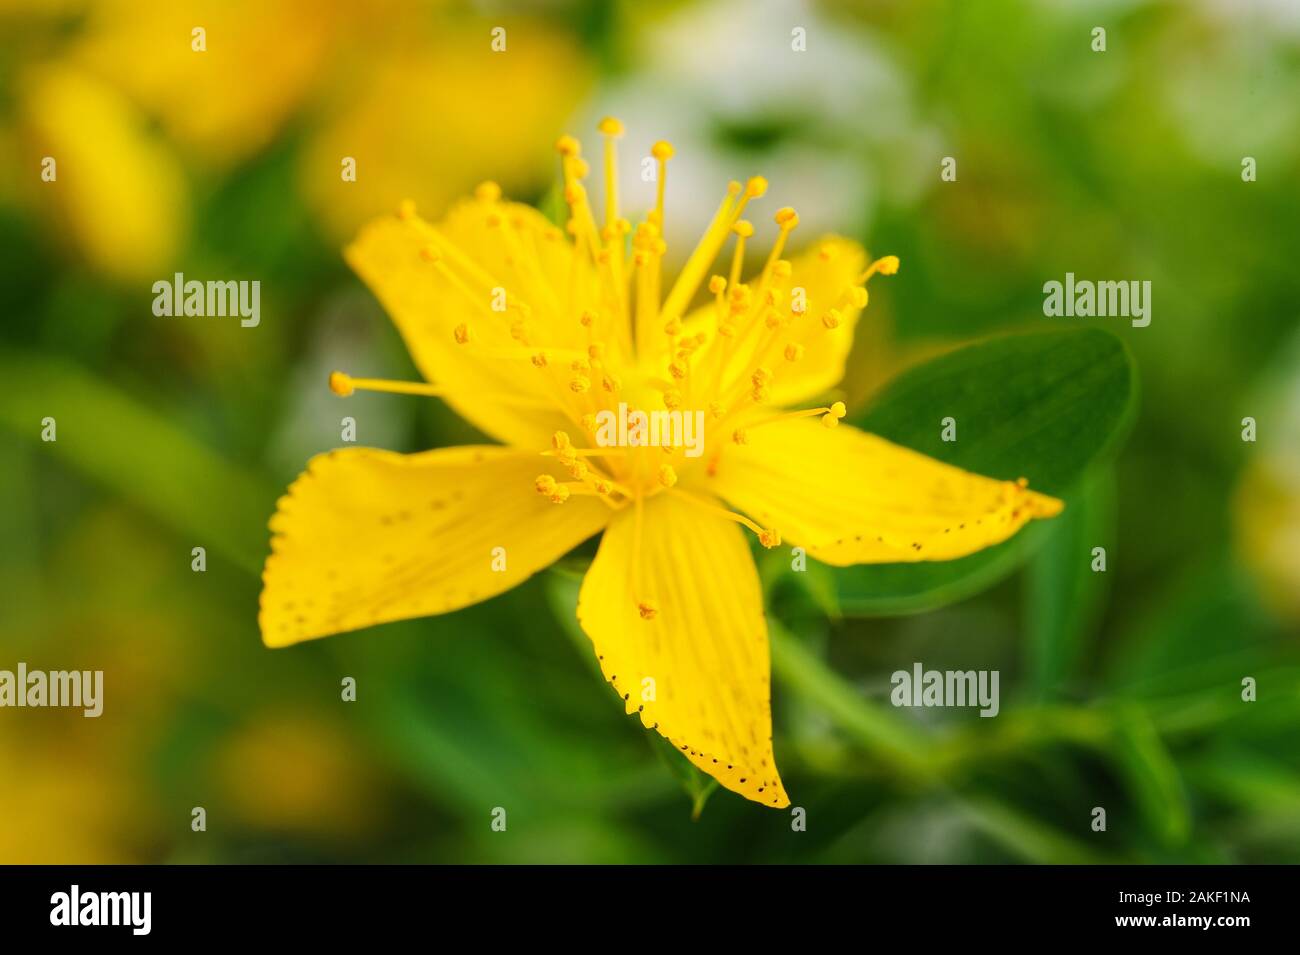 st. john's wort (Hypericum) flowers on blurred background Stock Photo